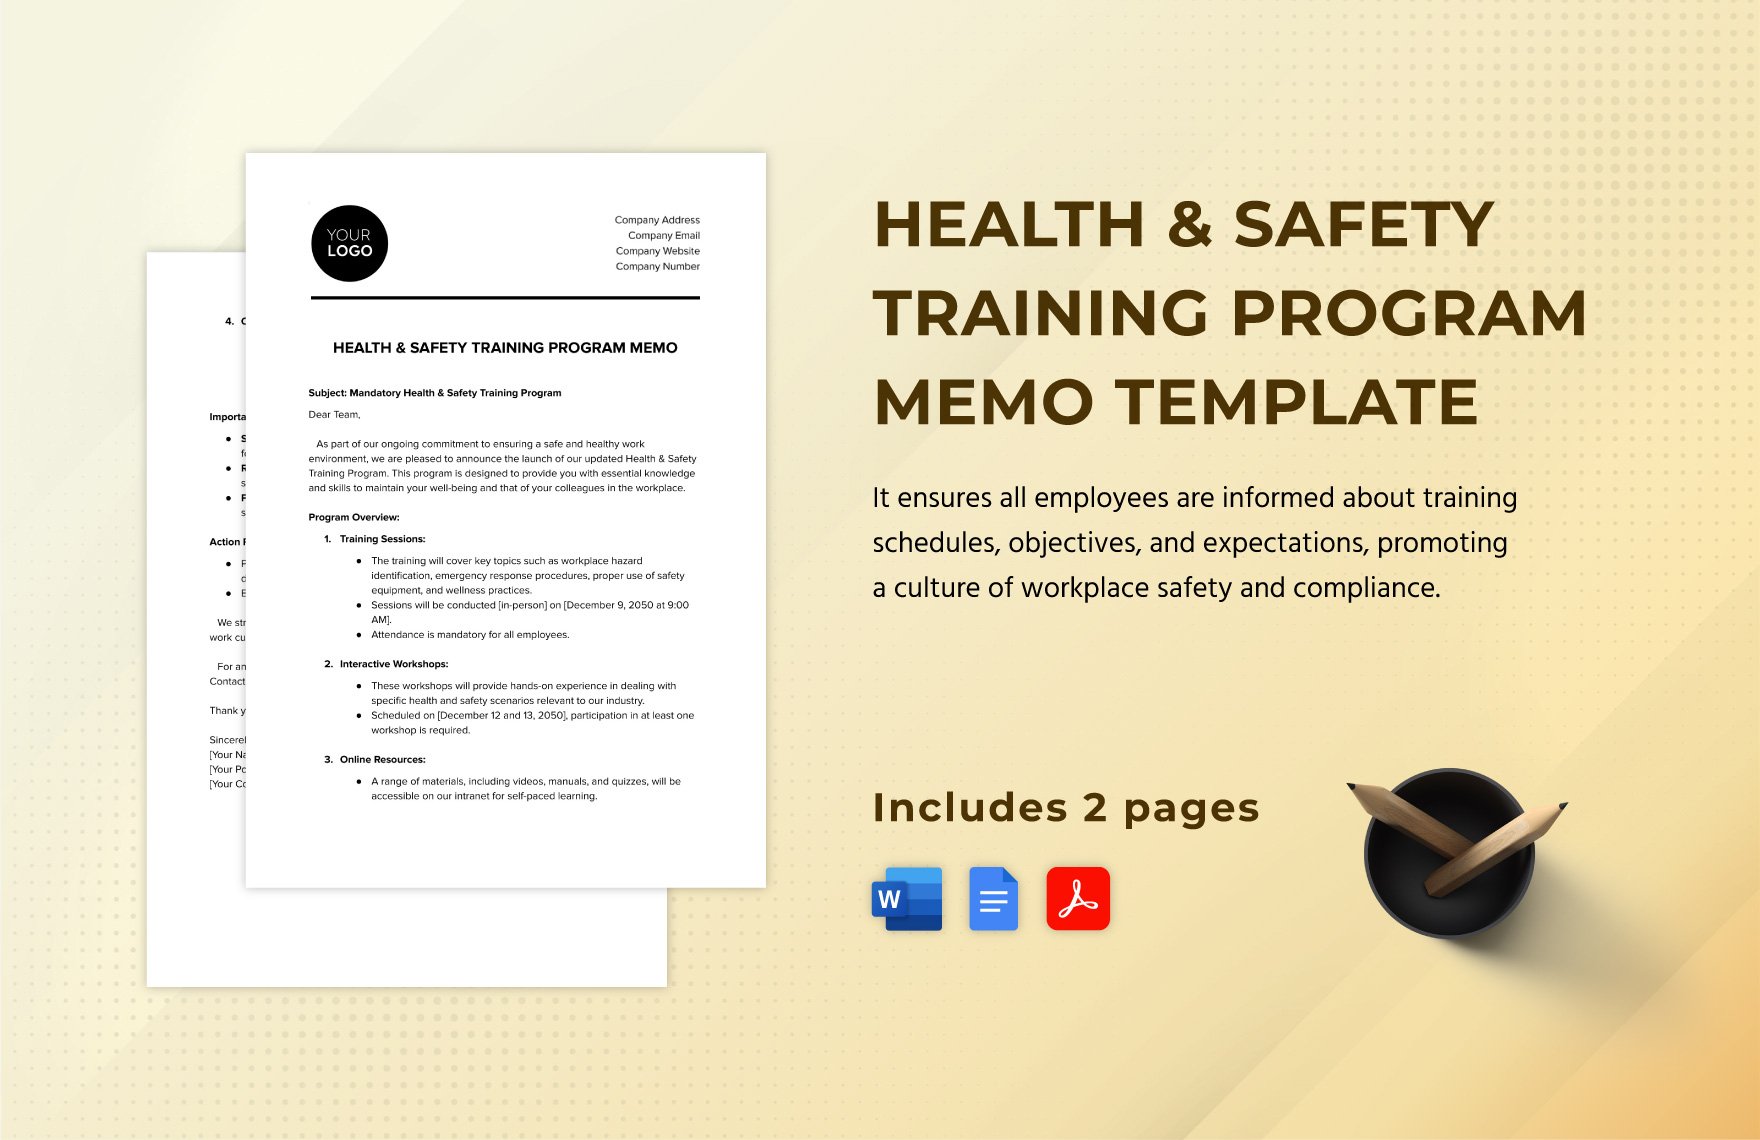 Health & Safety Training Program Memo Template